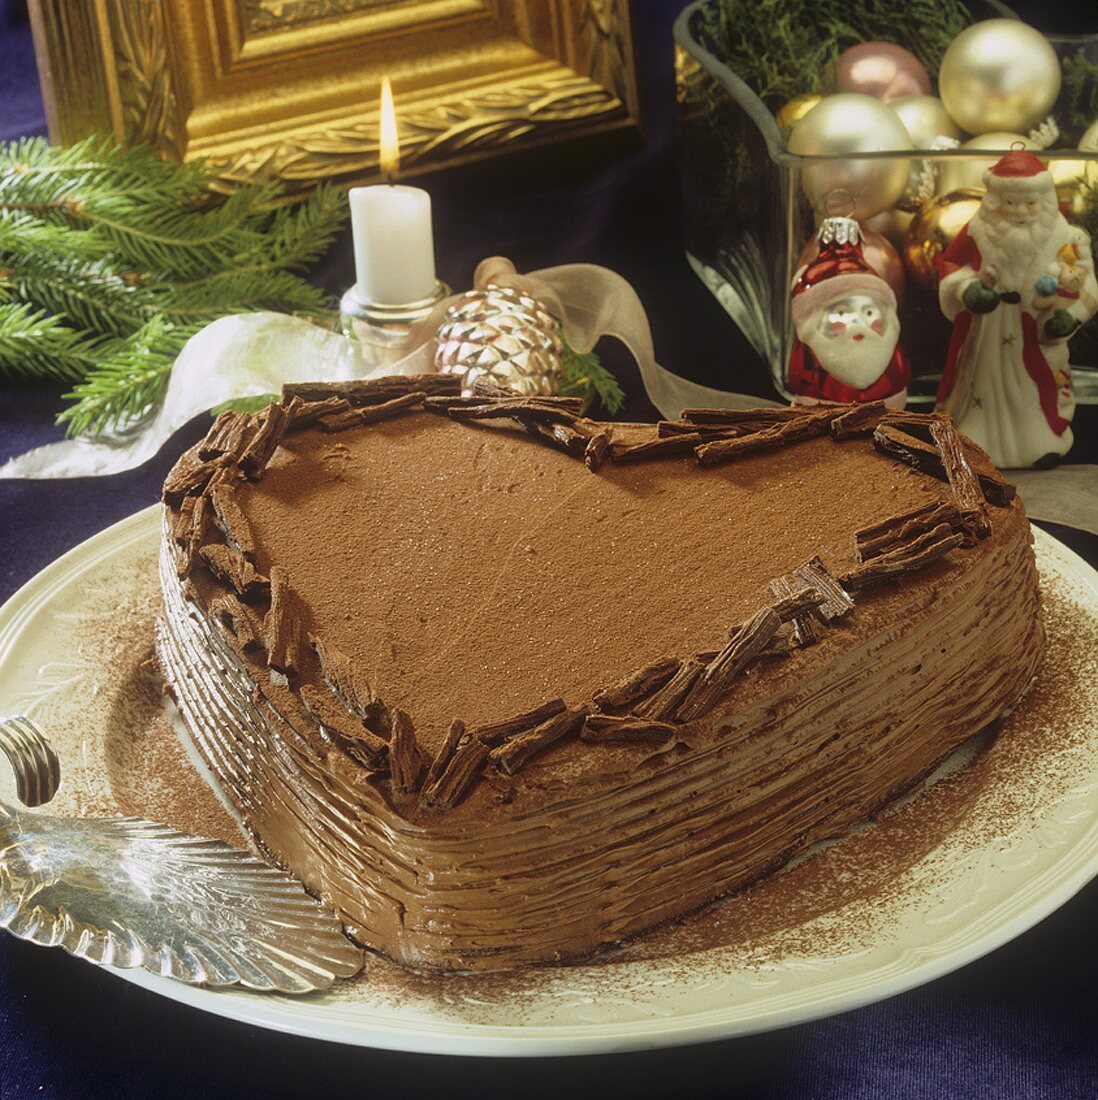 Heart-shaped chocolate cake for Christmas